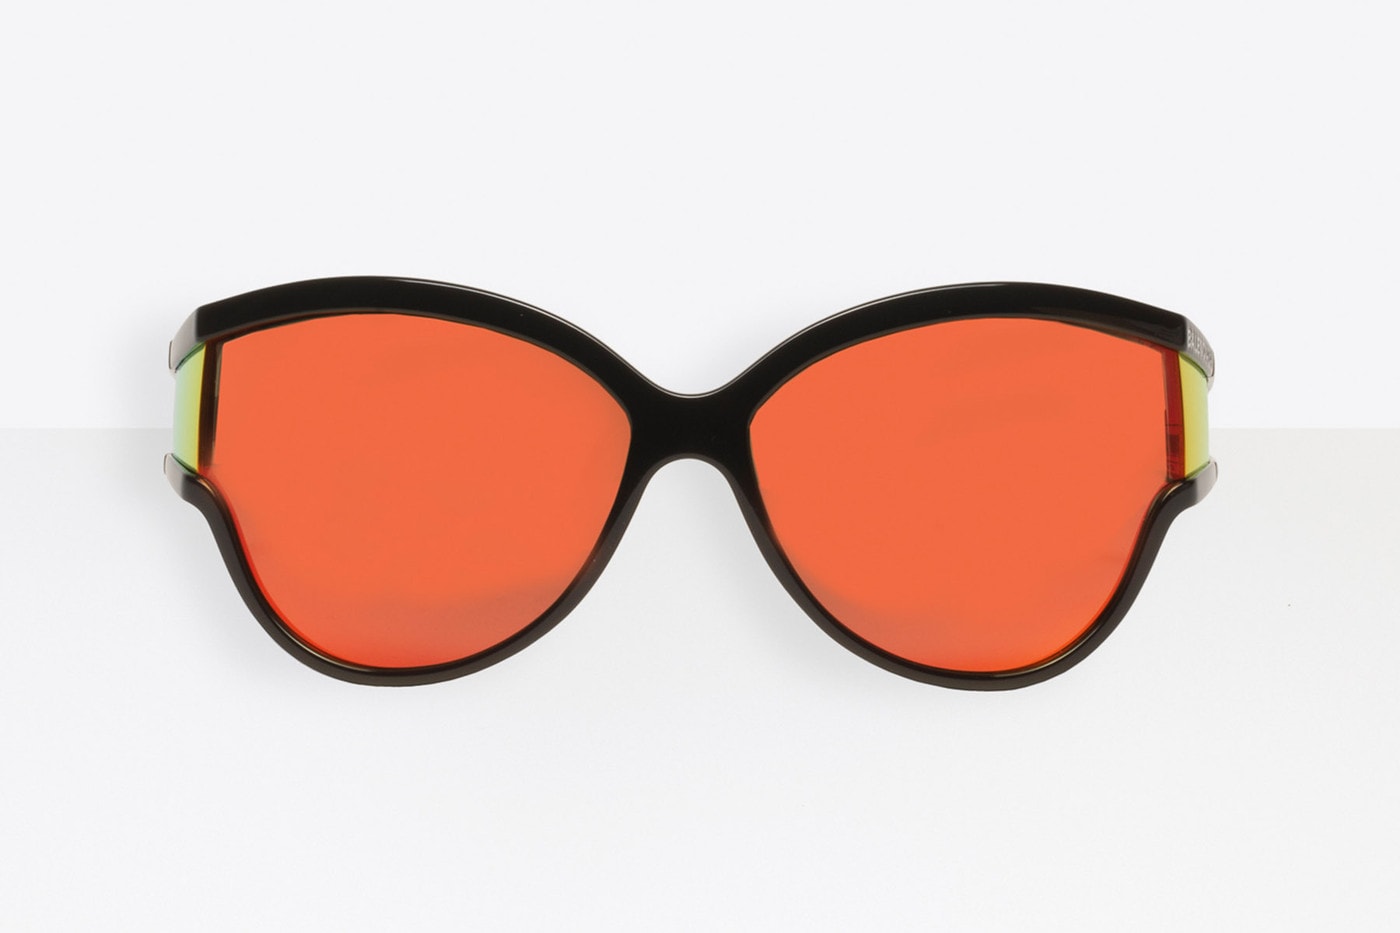 Balenciaga Demna Gvasalia Kering Eyewear Sunglasses Dover Street Market